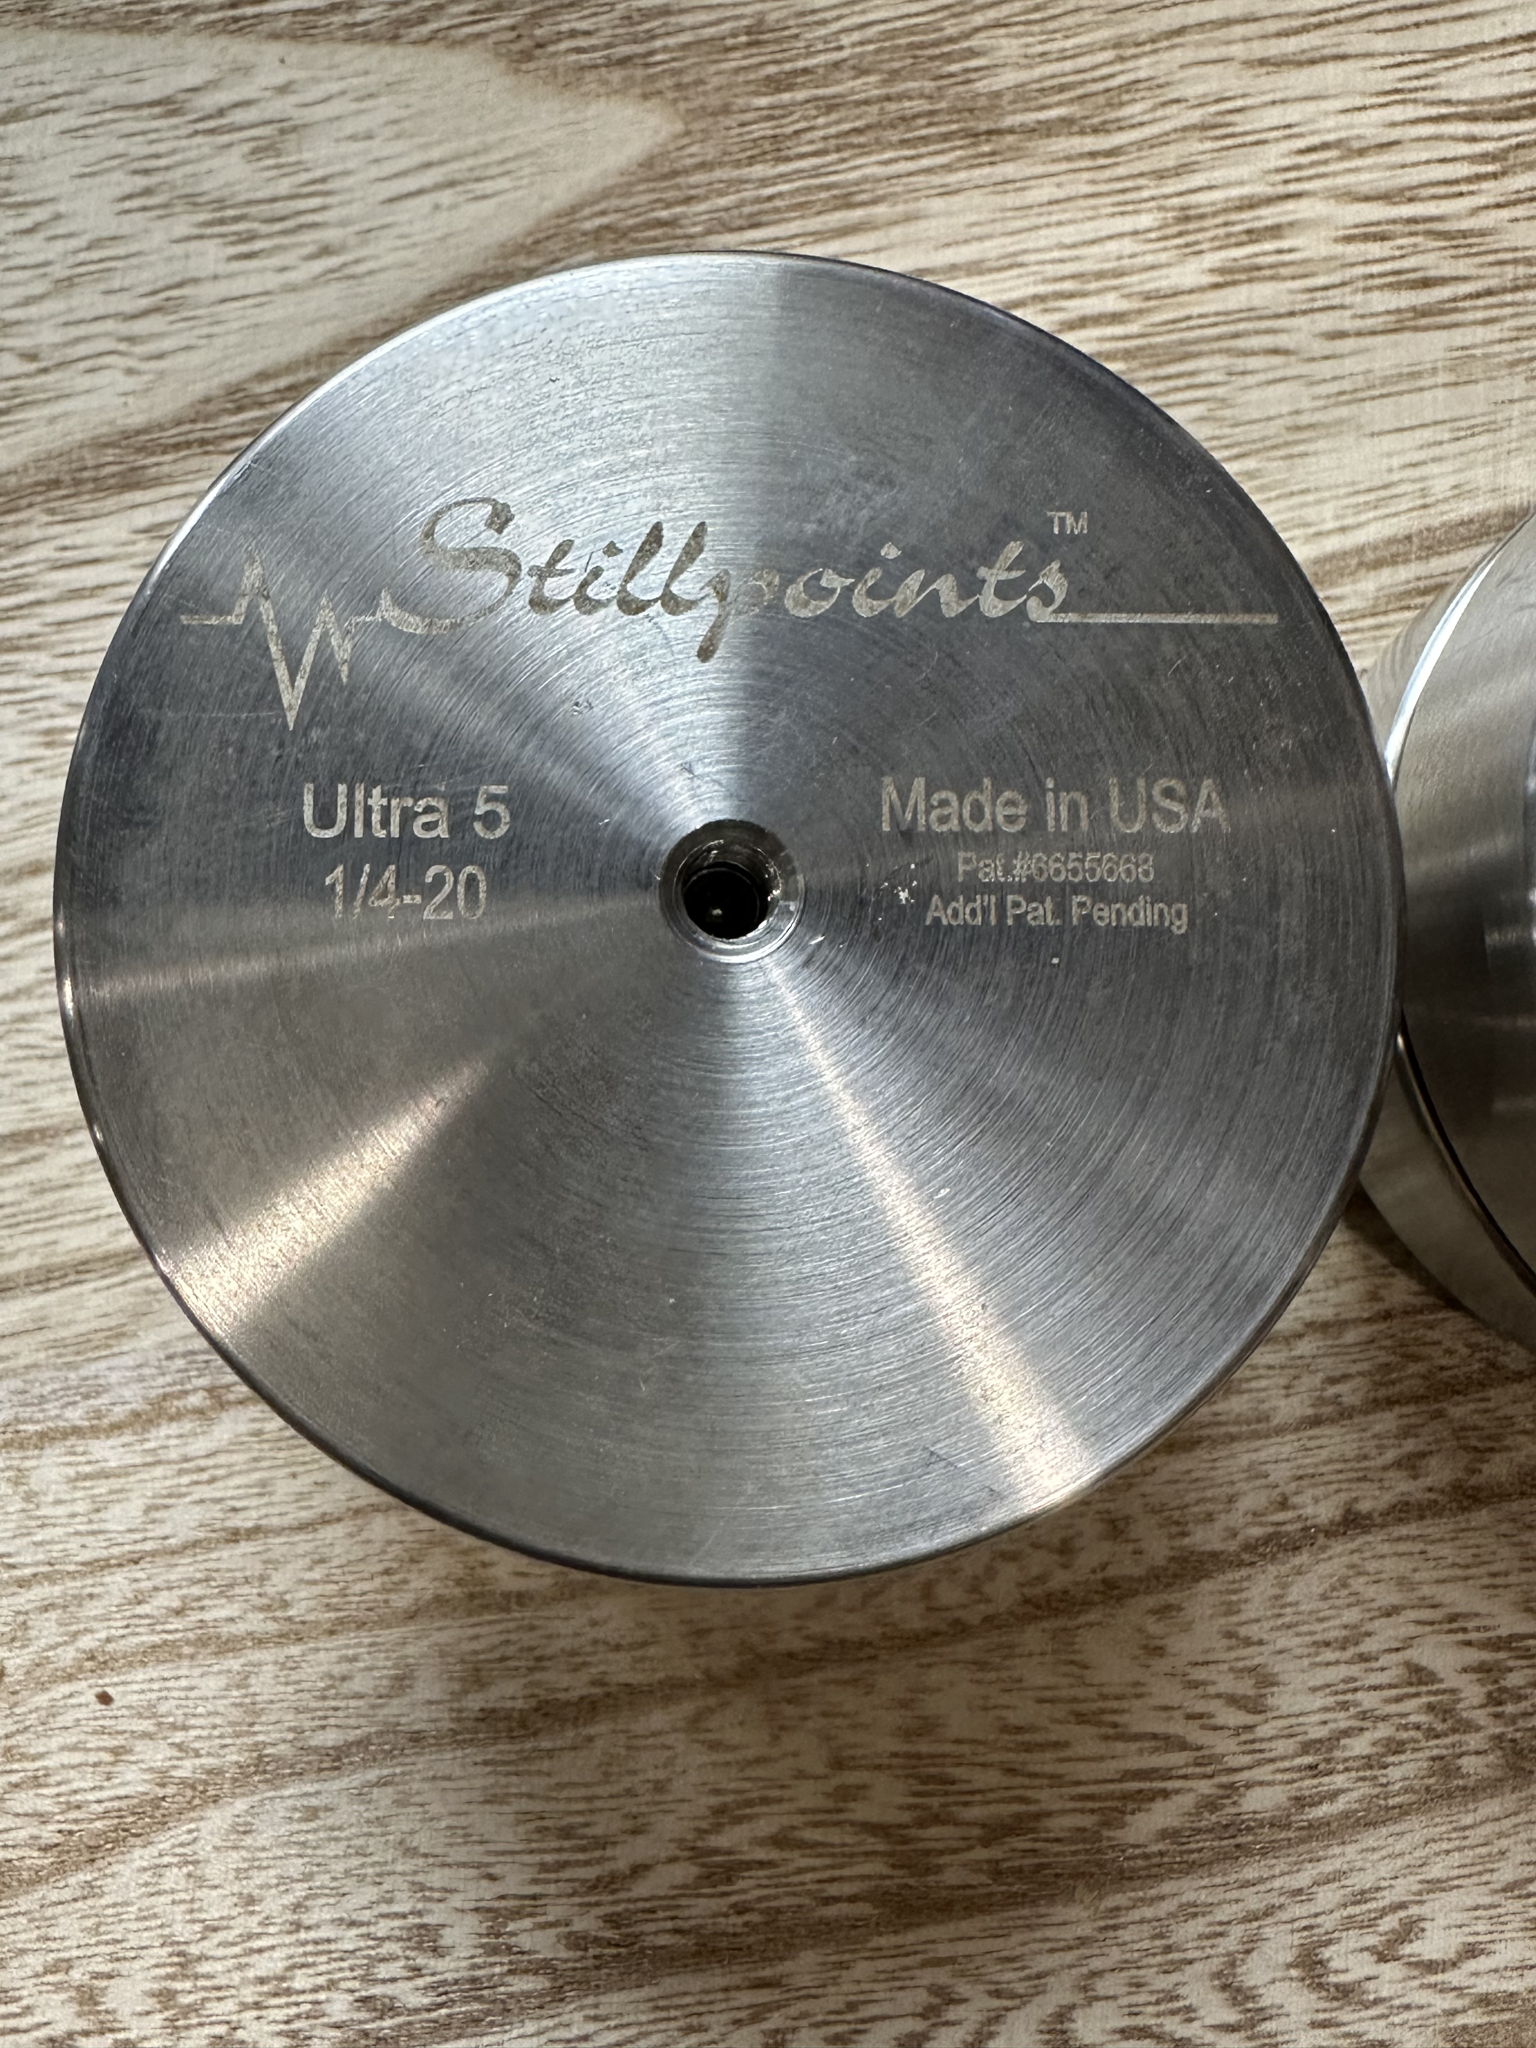 Two Stillpoints LLC Ultra 5 Version 1 4